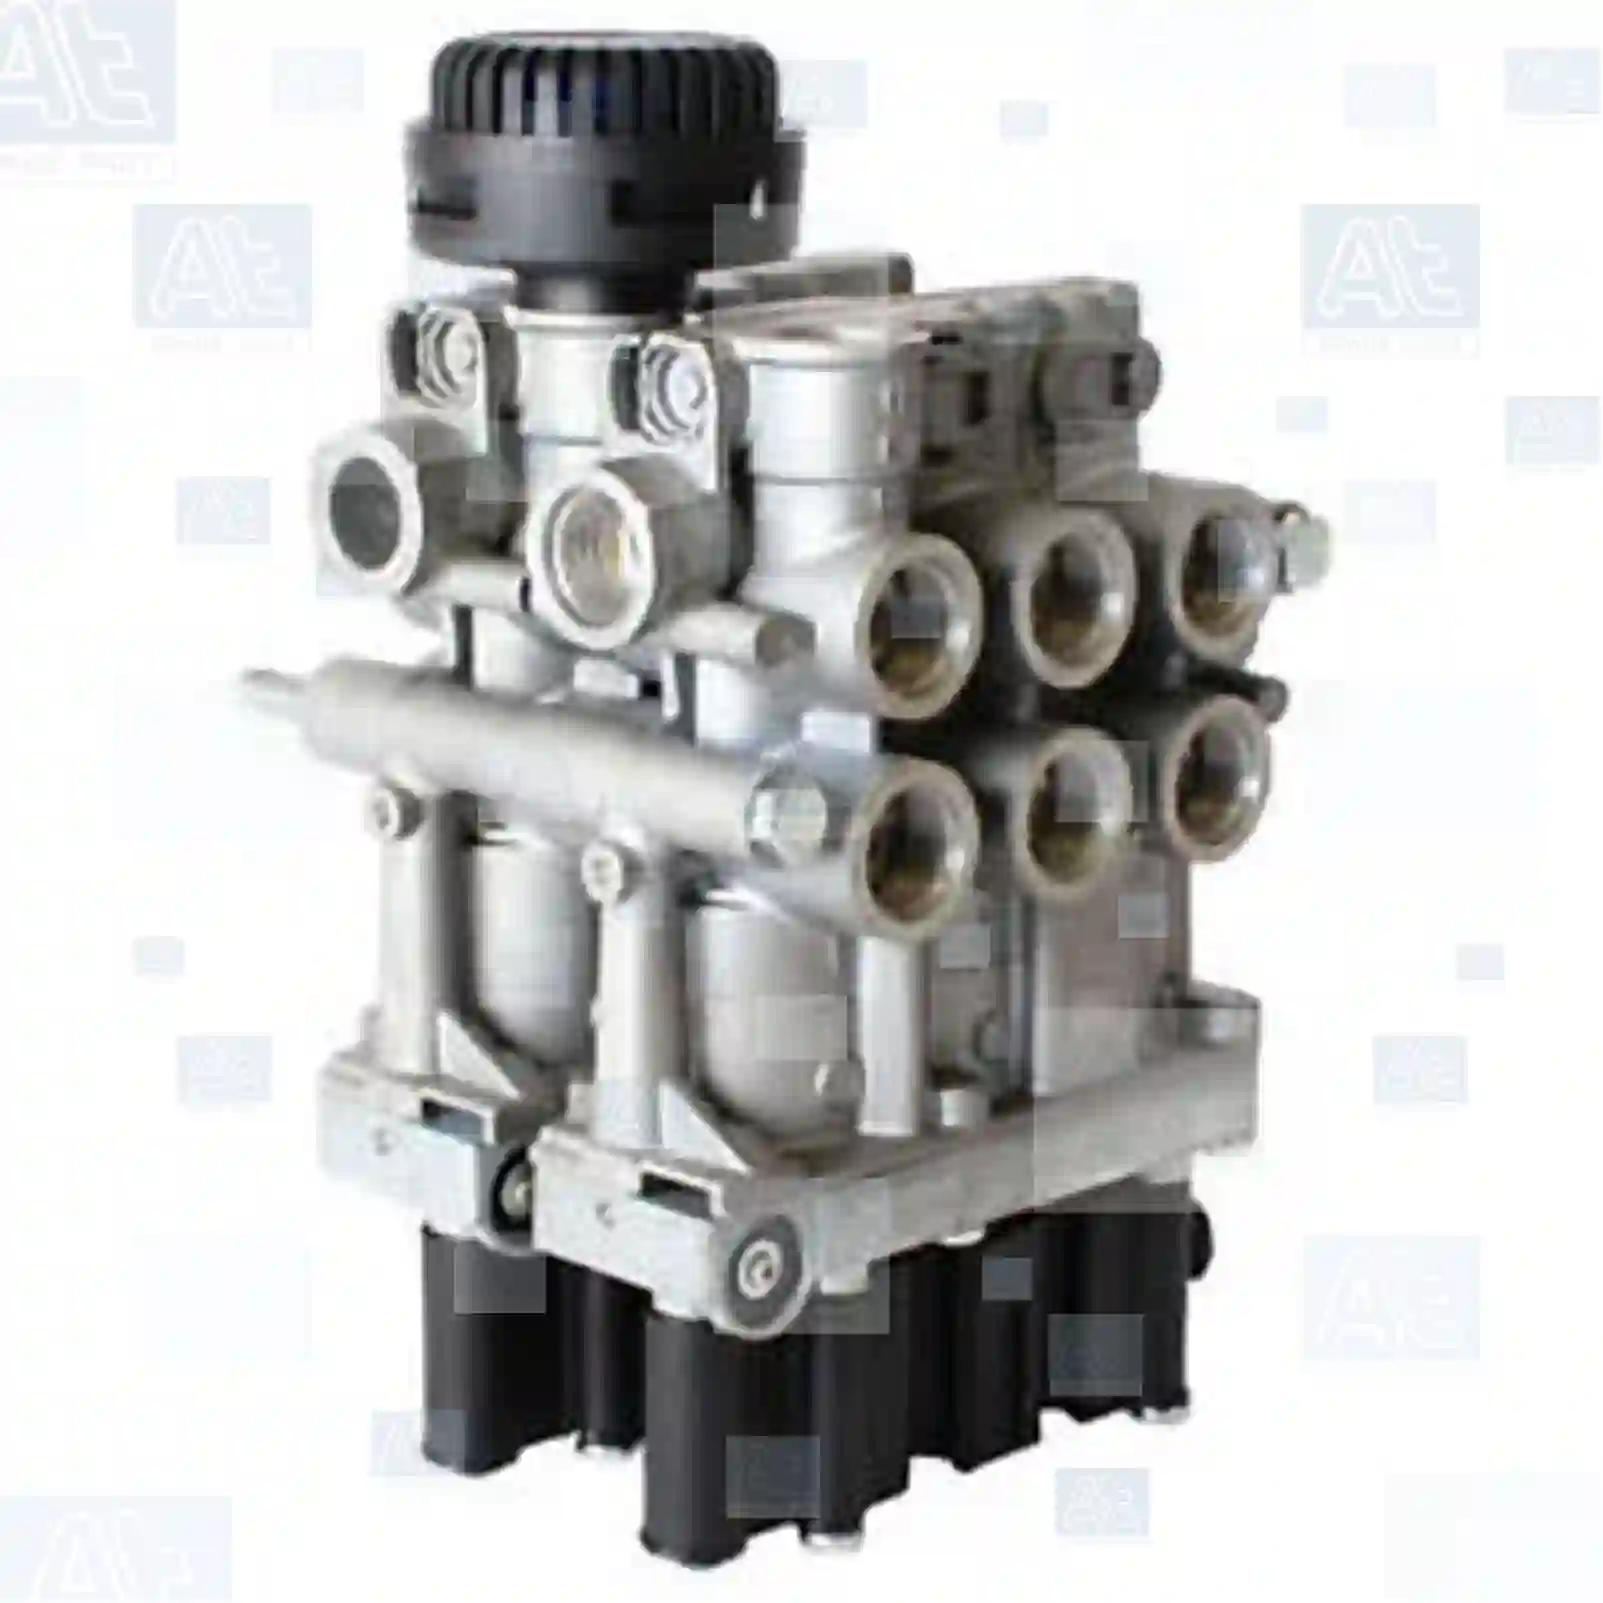 Solenoid Valve Solenoid valve, ECAS, at no: 77716338 ,  oem no:1305452, 1305452A, 1305452R, 81259026147, 81259029147, 0003276825, 1453164, 1934999, ZG50769-0008 At Spare Part | Engine, Accelerator Pedal, Camshaft, Connecting Rod, Crankcase, Crankshaft, Cylinder Head, Engine Suspension Mountings, Exhaust Manifold, Exhaust Gas Recirculation, Filter Kits, Flywheel Housing, General Overhaul Kits, Engine, Intake Manifold, Oil Cleaner, Oil Cooler, Oil Filter, Oil Pump, Oil Sump, Piston & Liner, Sensor & Switch, Timing Case, Turbocharger, Cooling System, Belt Tensioner, Coolant Filter, Coolant Pipe, Corrosion Prevention Agent, Drive, Expansion Tank, Fan, Intercooler, Monitors & Gauges, Radiator, Thermostat, V-Belt / Timing belt, Water Pump, Fuel System, Electronical Injector Unit, Feed Pump, Fuel Filter, cpl., Fuel Gauge Sender,  Fuel Line, Fuel Pump, Fuel Tank, Injection Line Kit, Injection Pump, Exhaust System, Clutch & Pedal, Gearbox, Propeller Shaft, Axles, Brake System, Hubs & Wheels, Suspension, Leaf Spring, Universal Parts / Accessories, Steering, Electrical System, Cabin